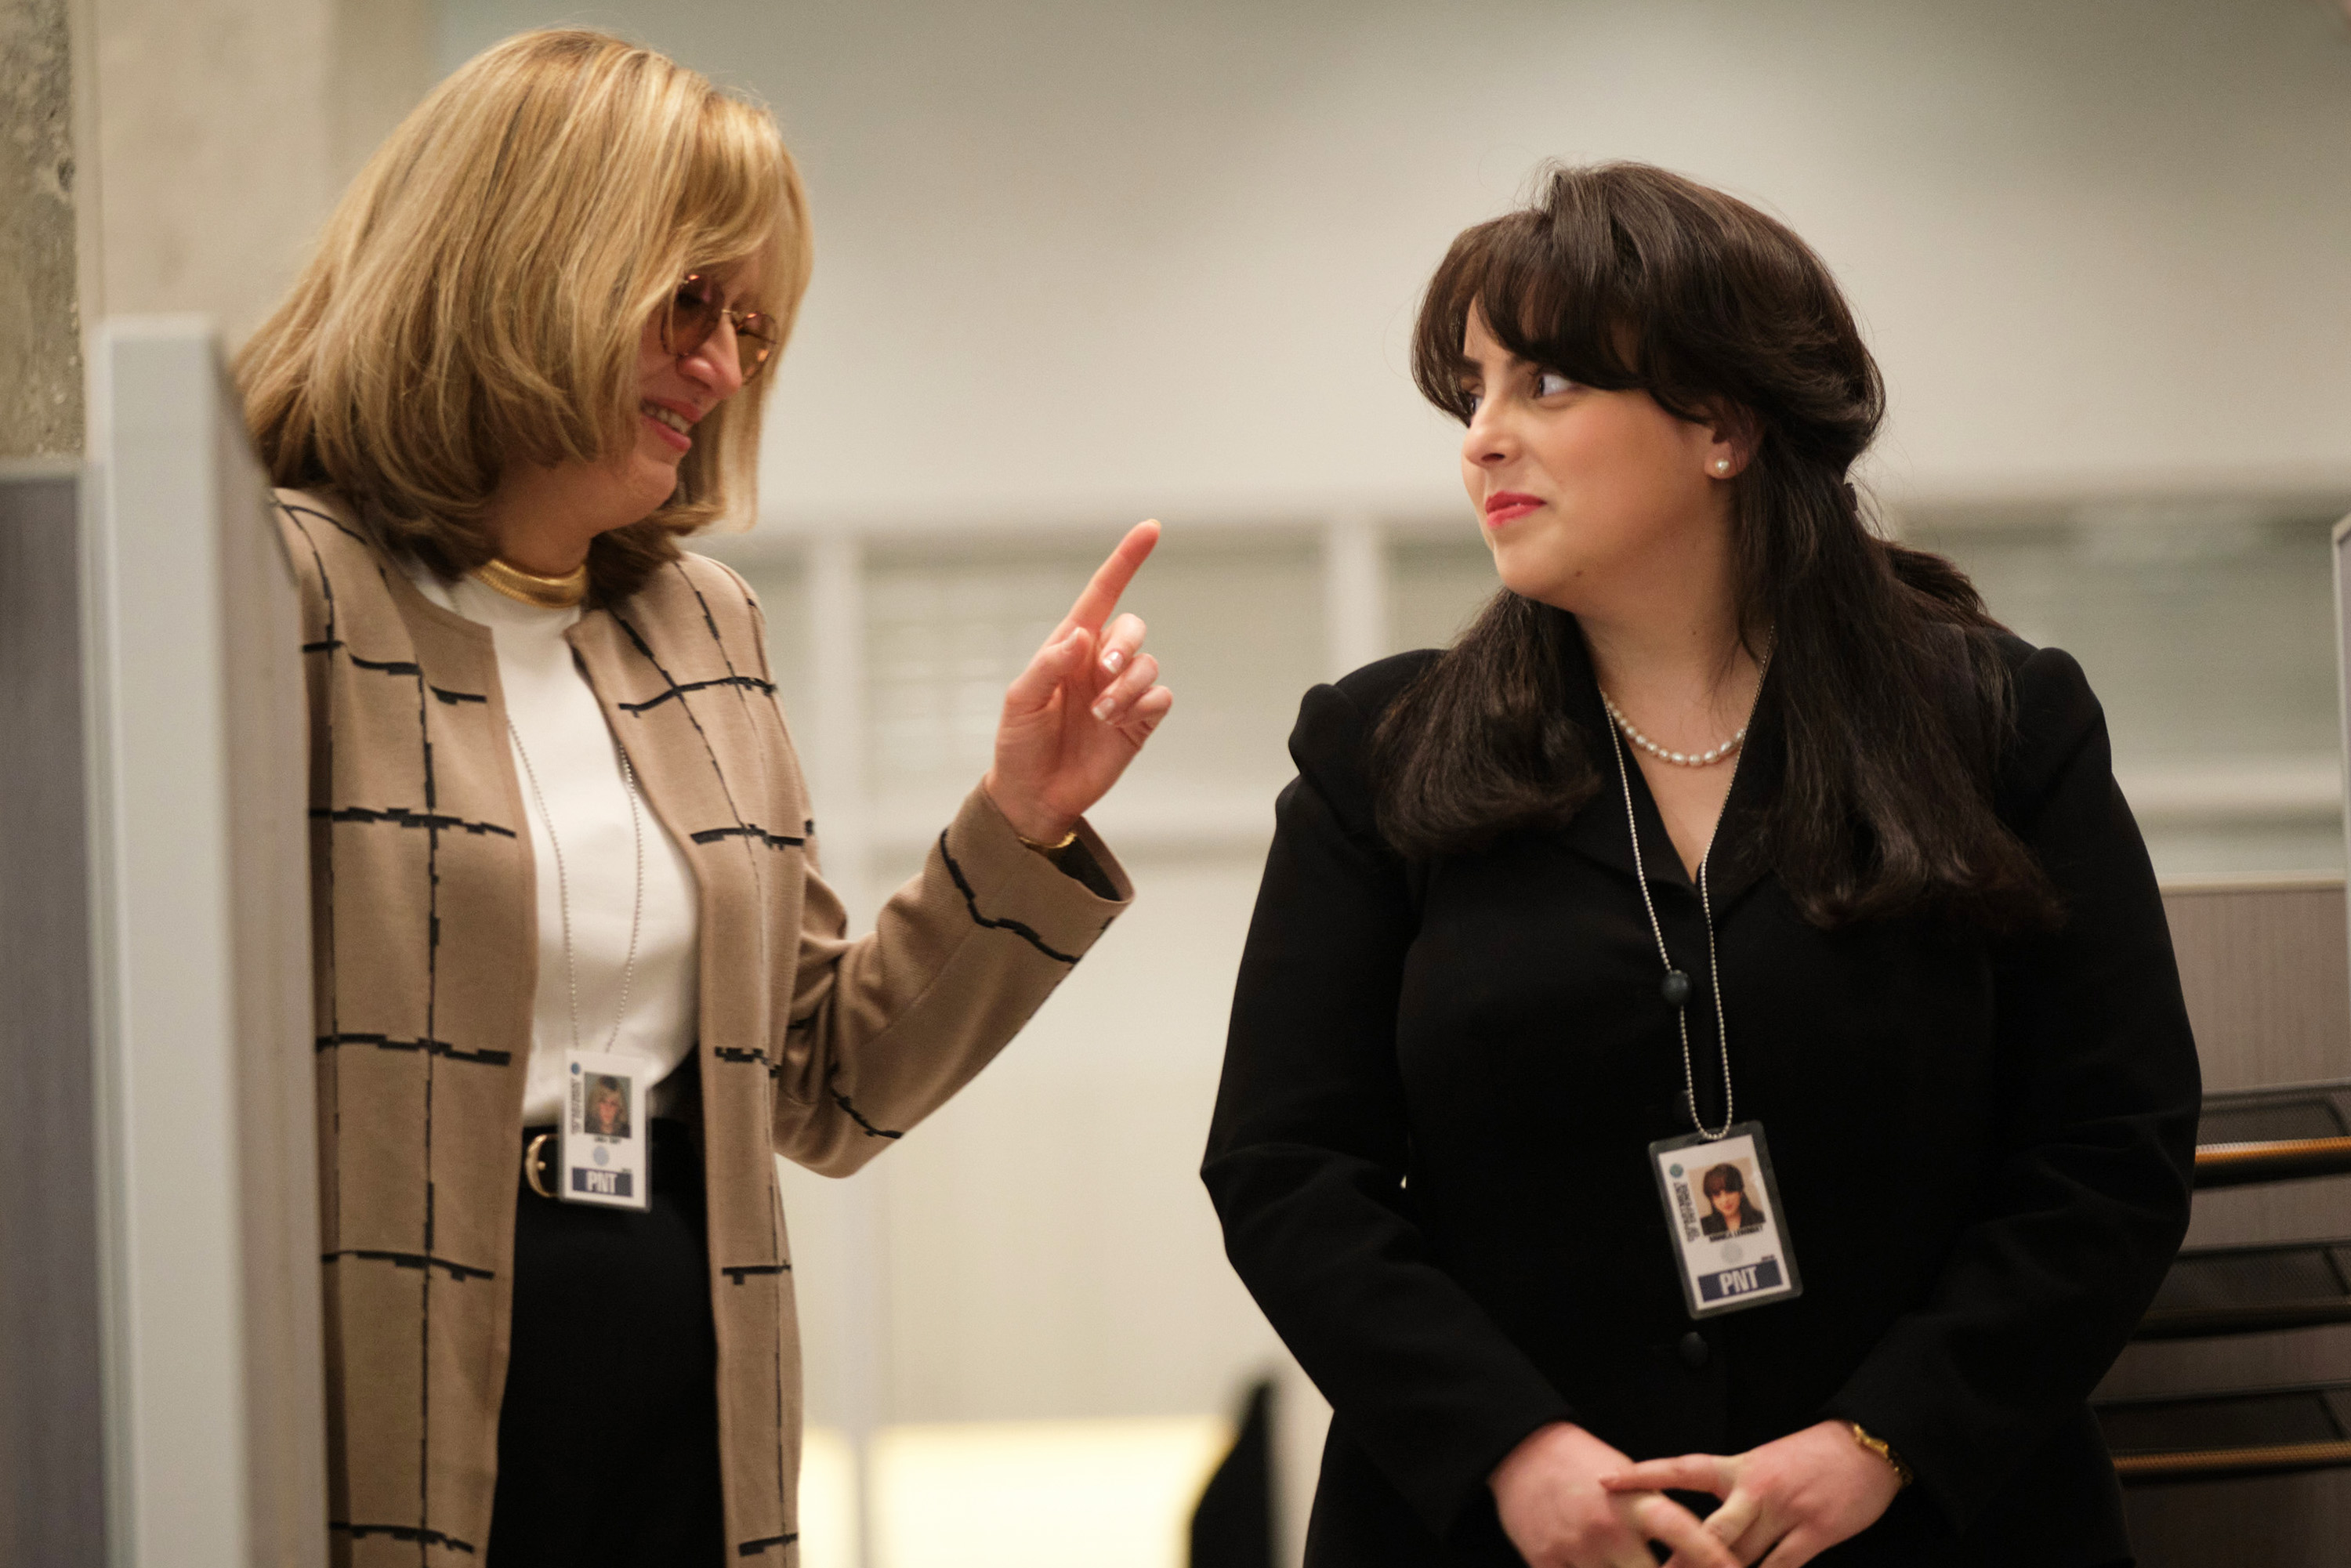 Linda Tripp (Sarah Paulson) points at Monica Lewinsky (Beanie Feldstein) in the office